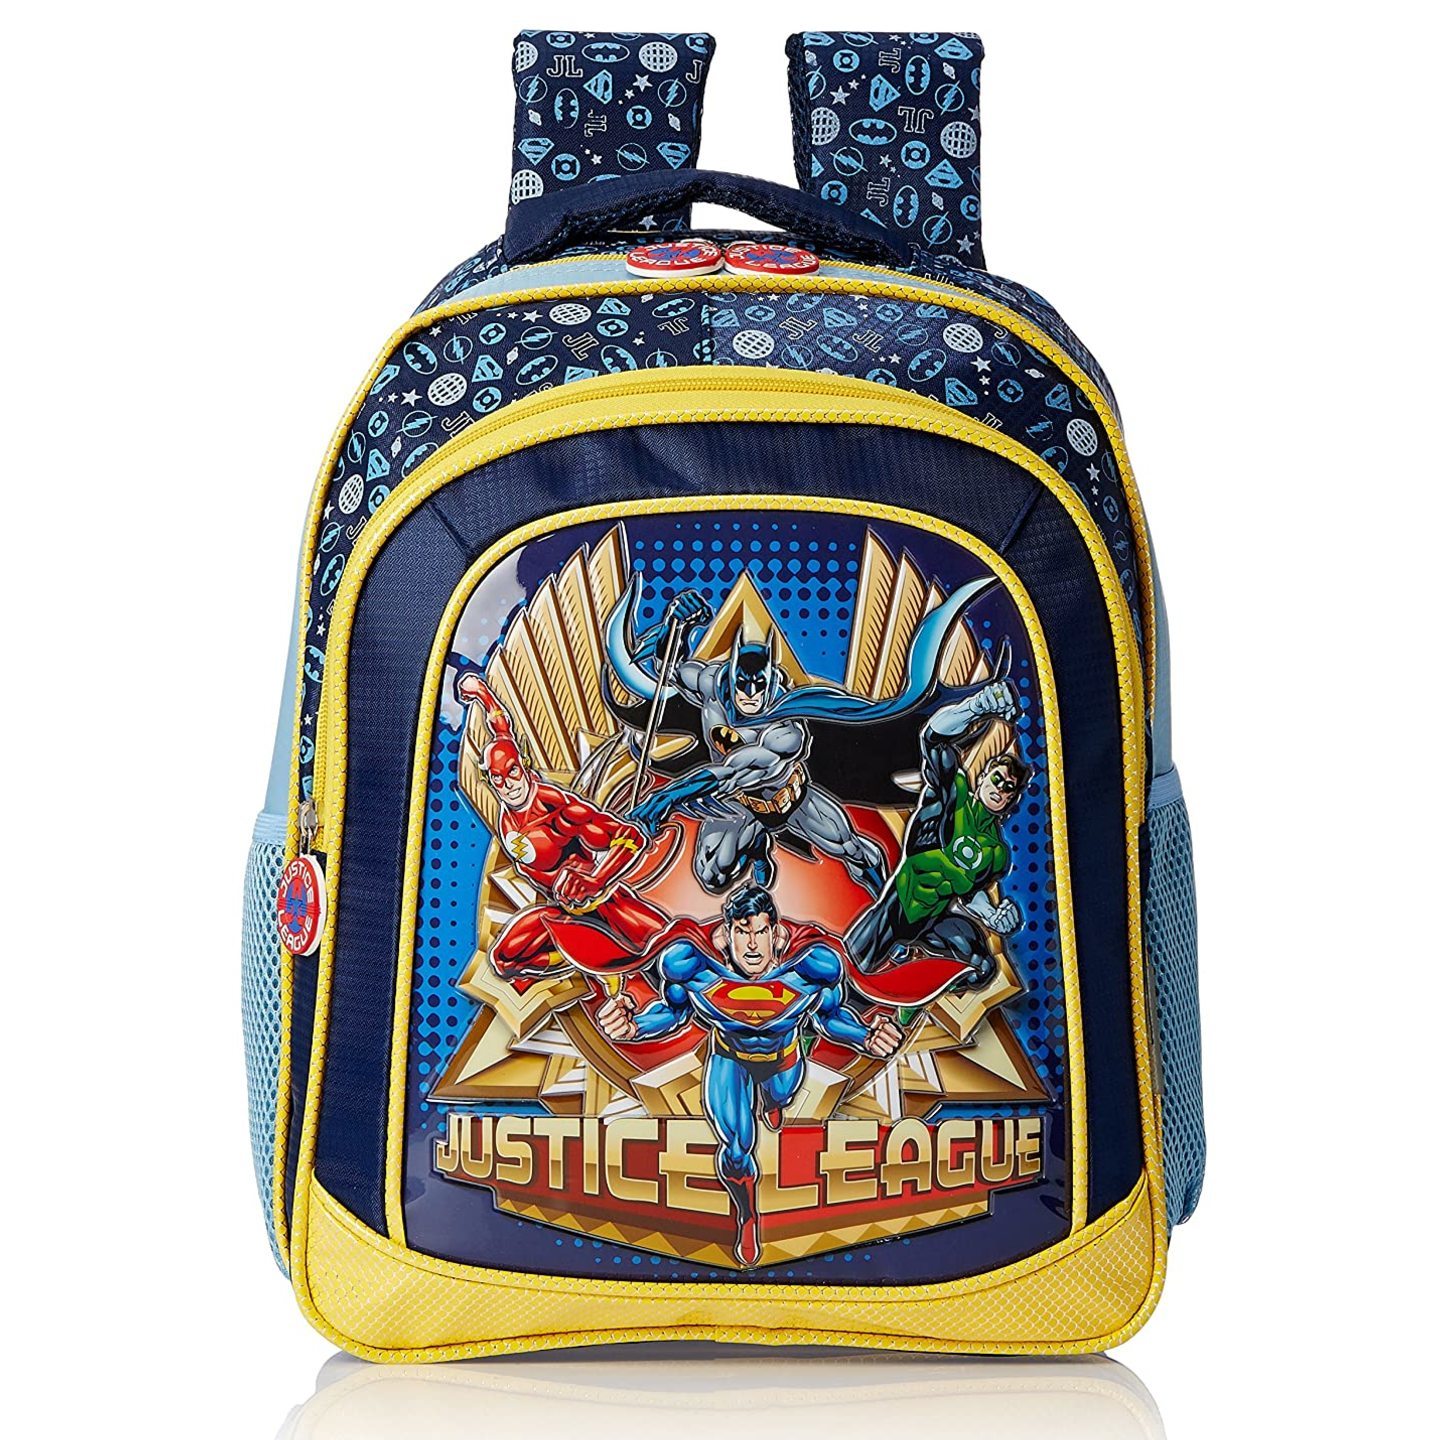 Justice League 14 School Backpack